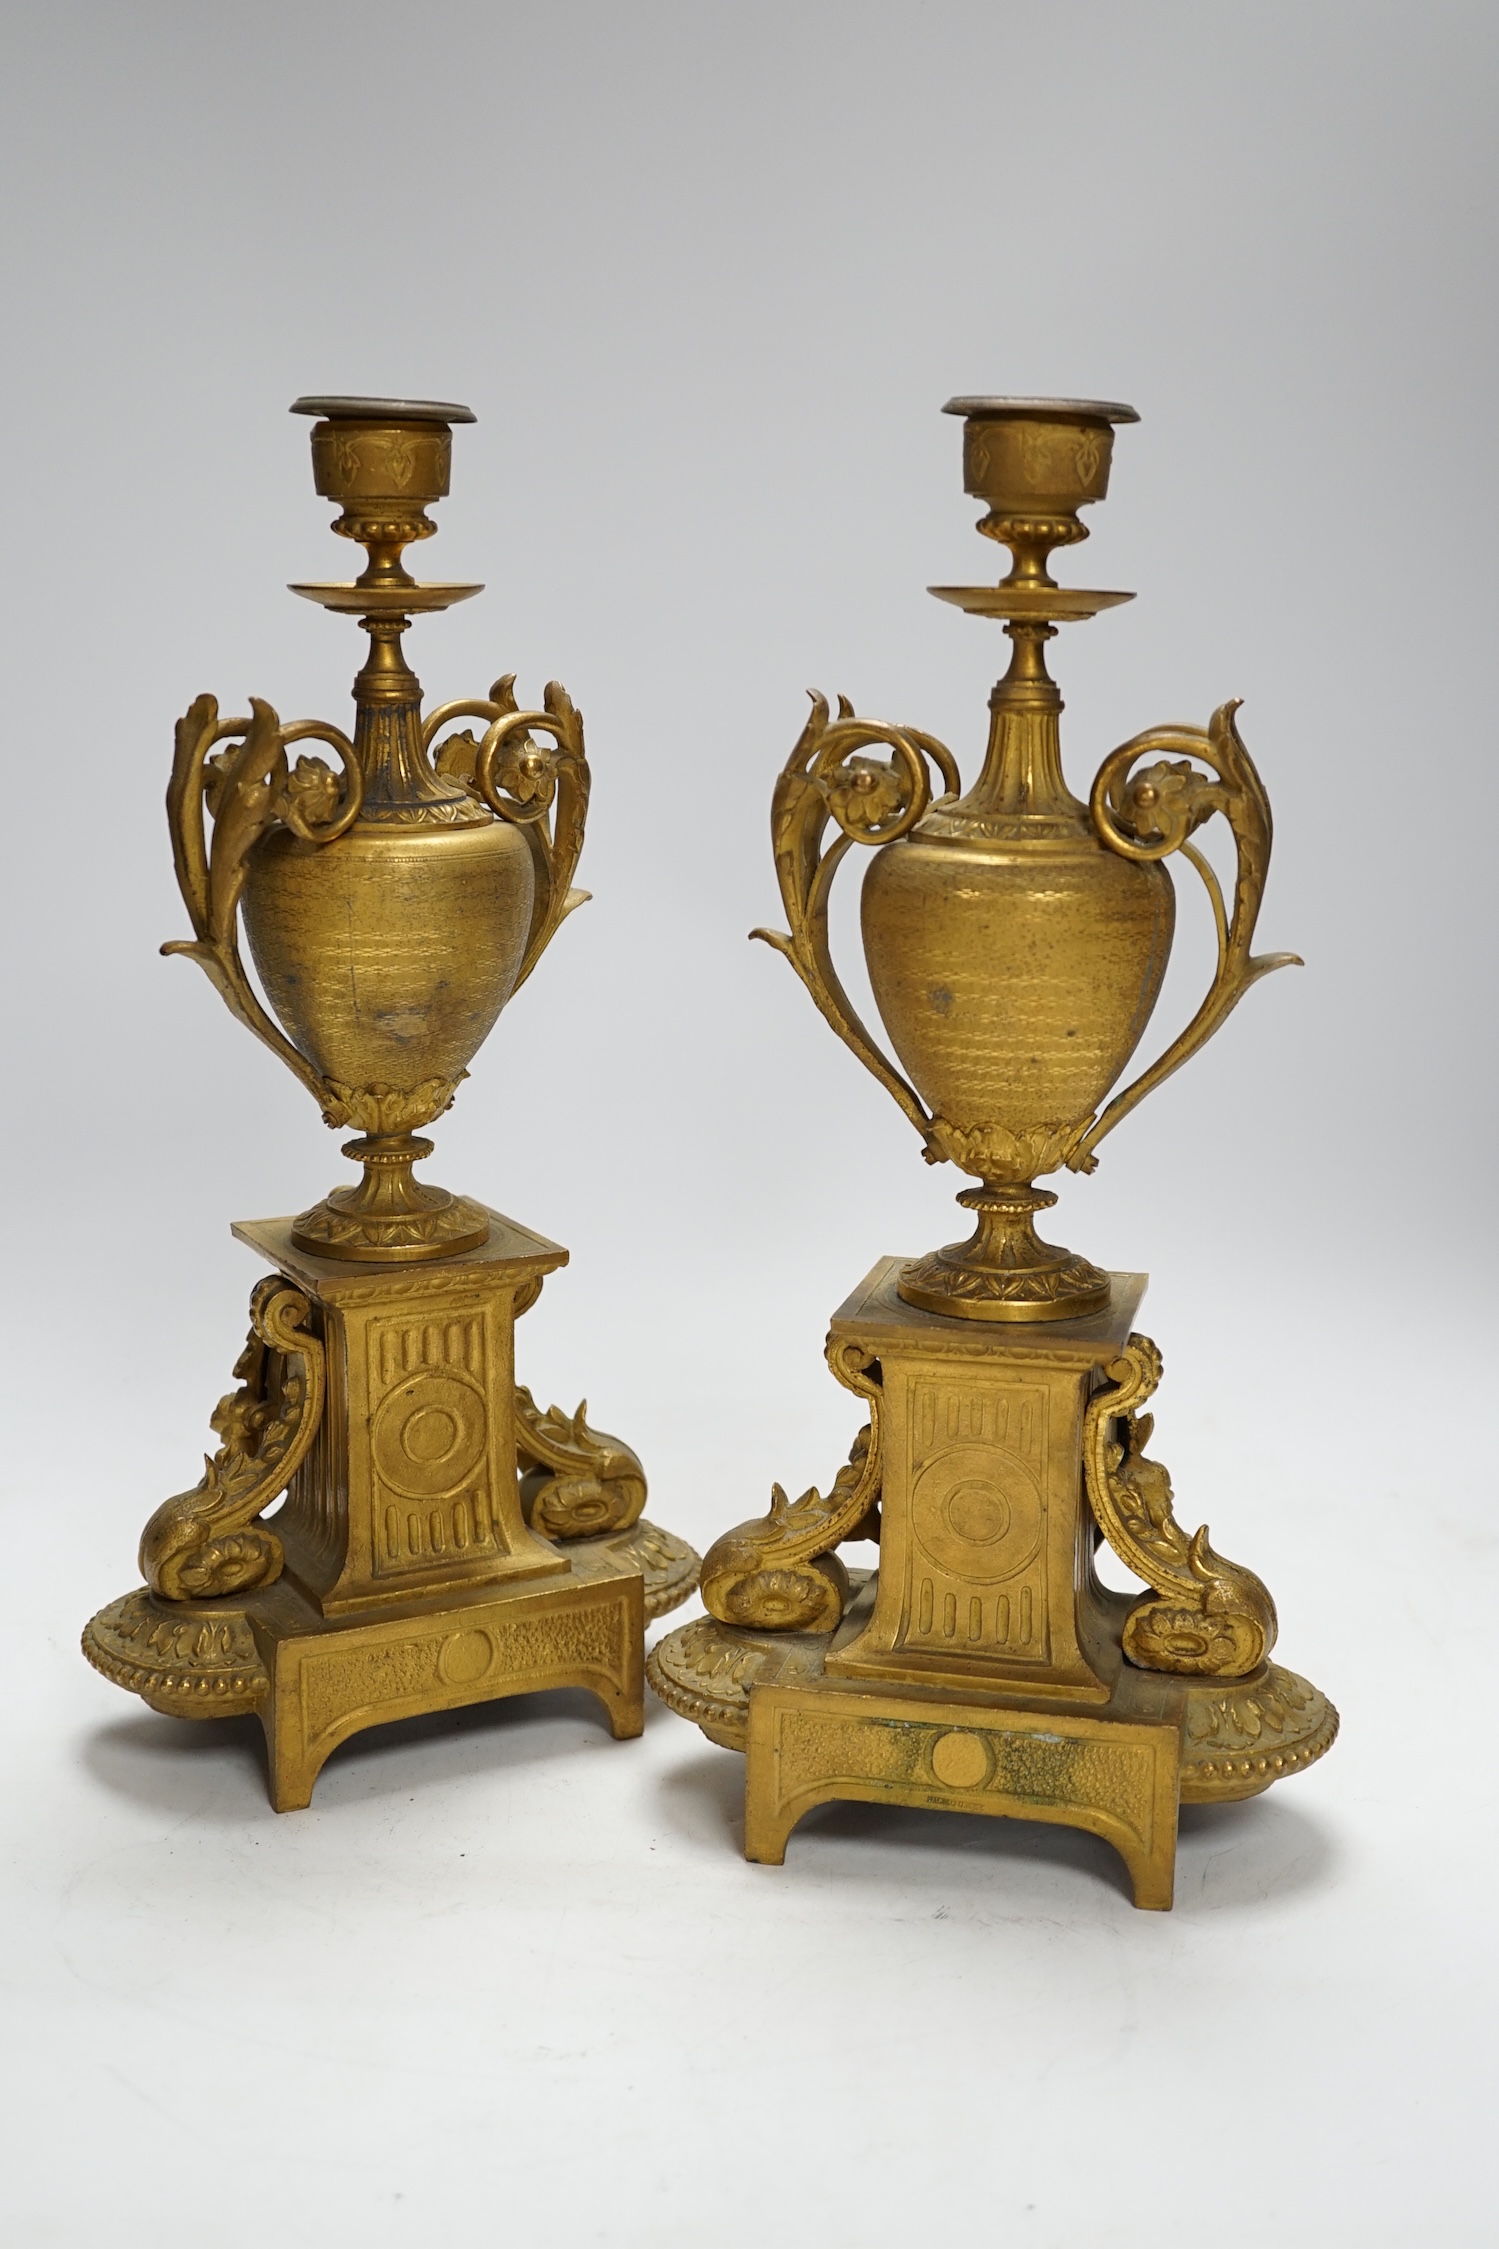 A pair of 19th century French ornamental ormolu candlesticks, possibly clock garnitures, 32.5cm high